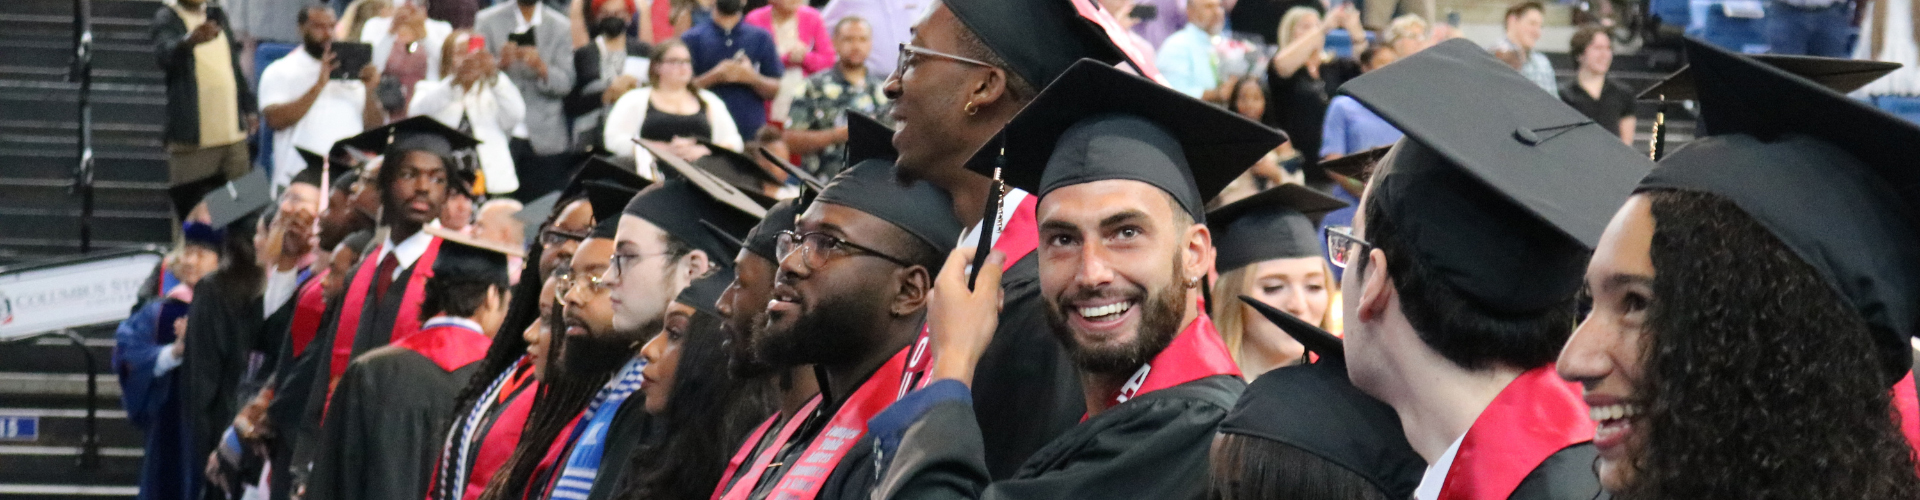 multiple students wearing graduation regalia